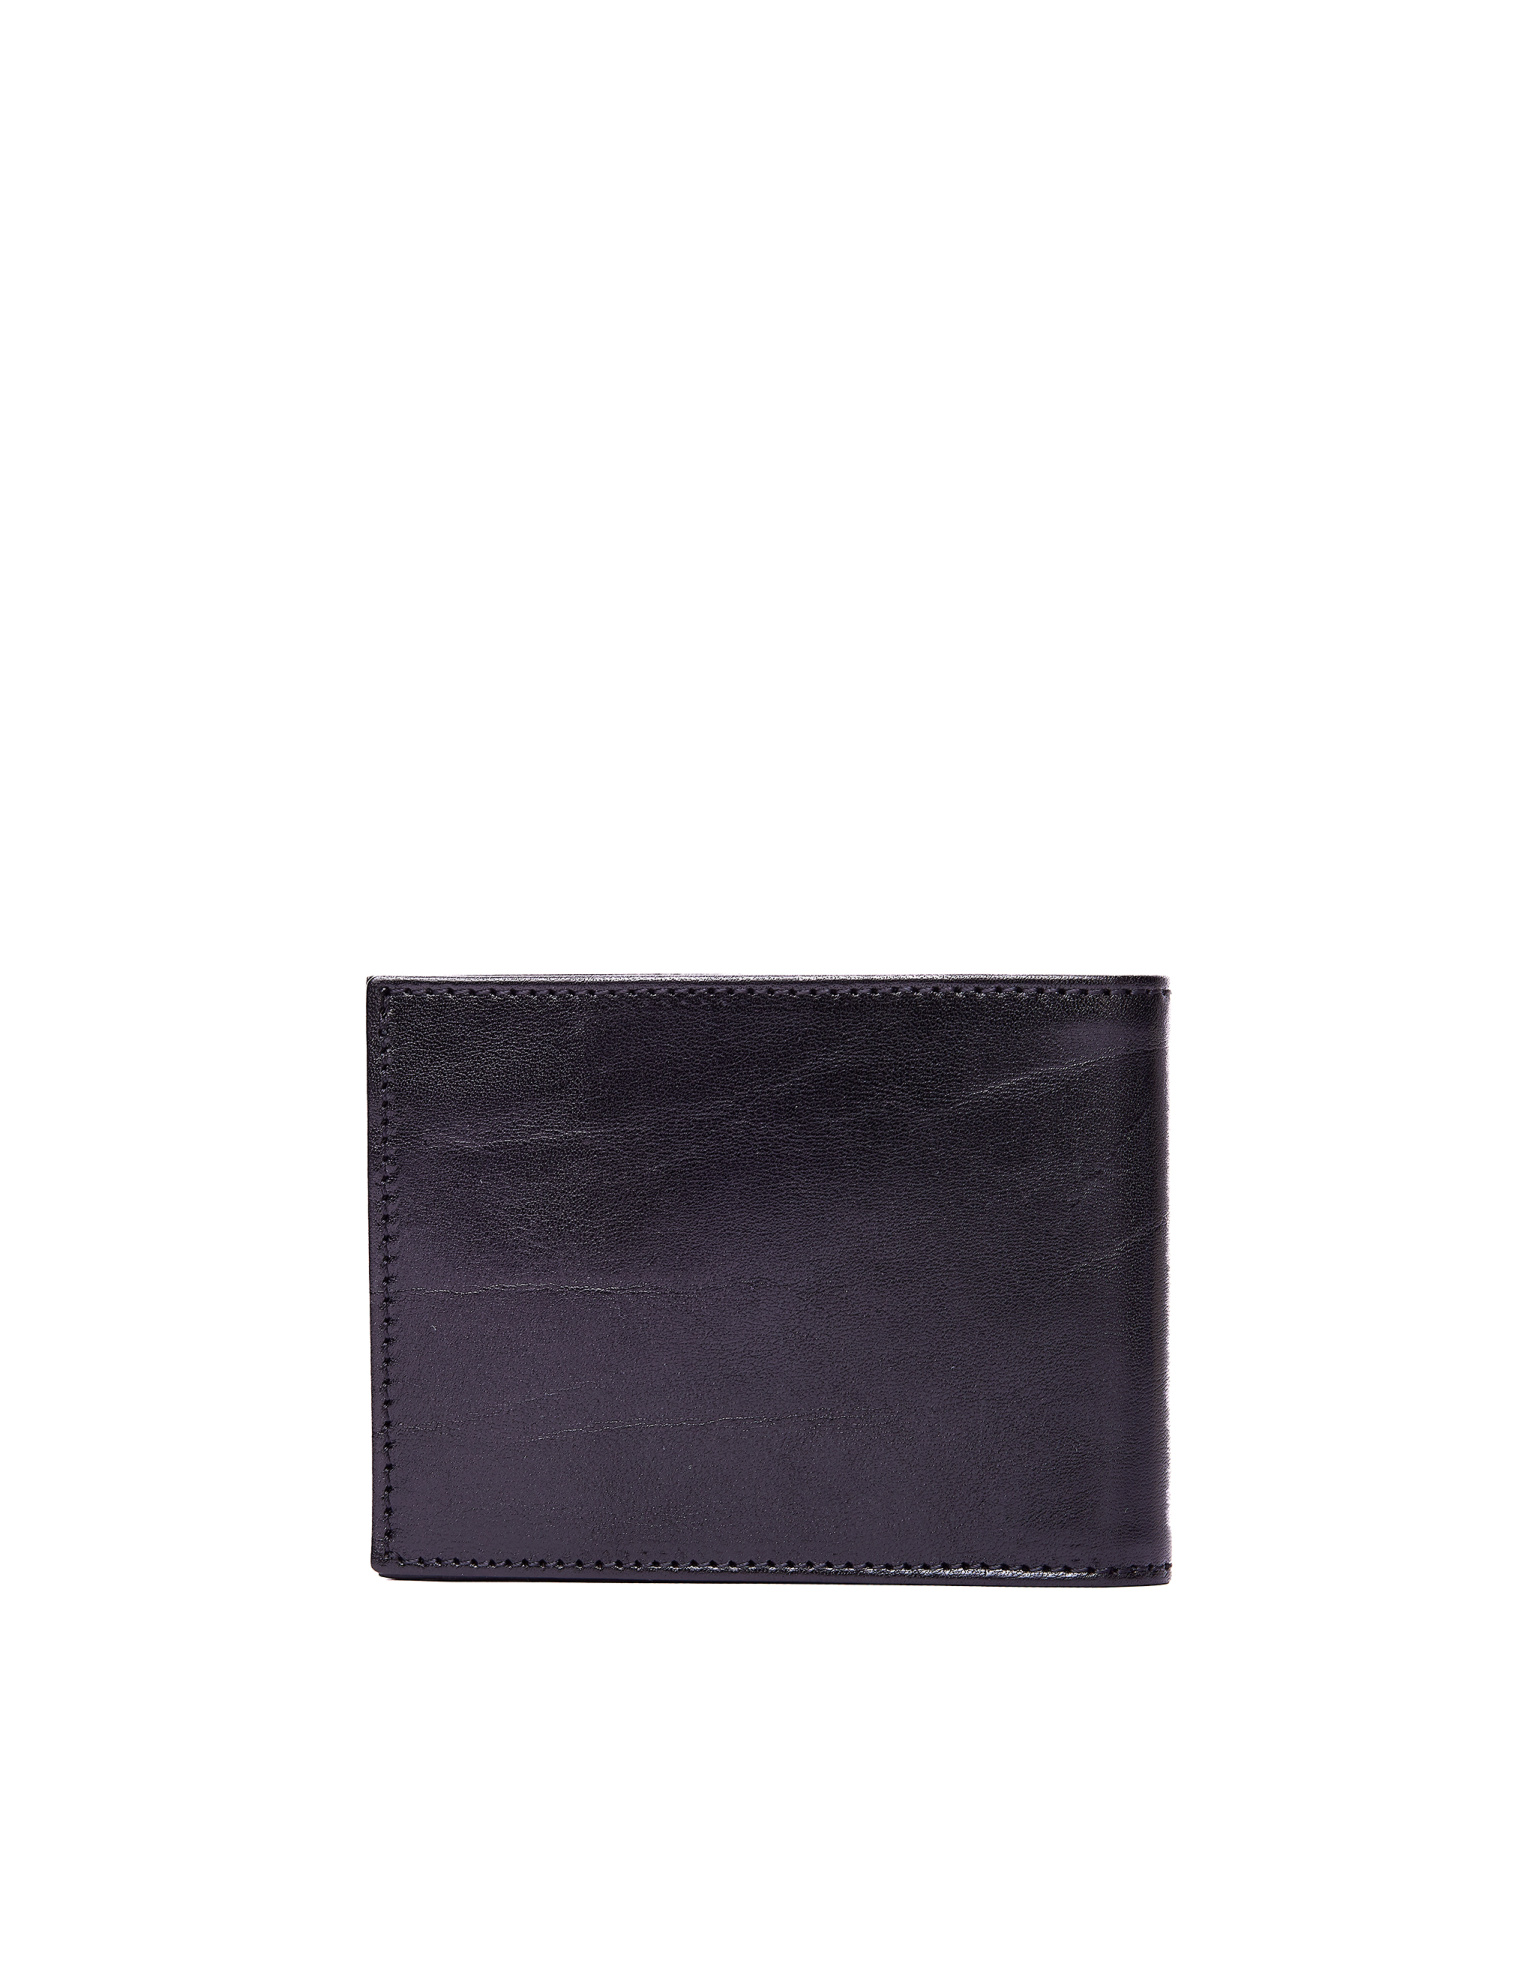 Ugo Cacciatori Black Leather Pocket Wallet